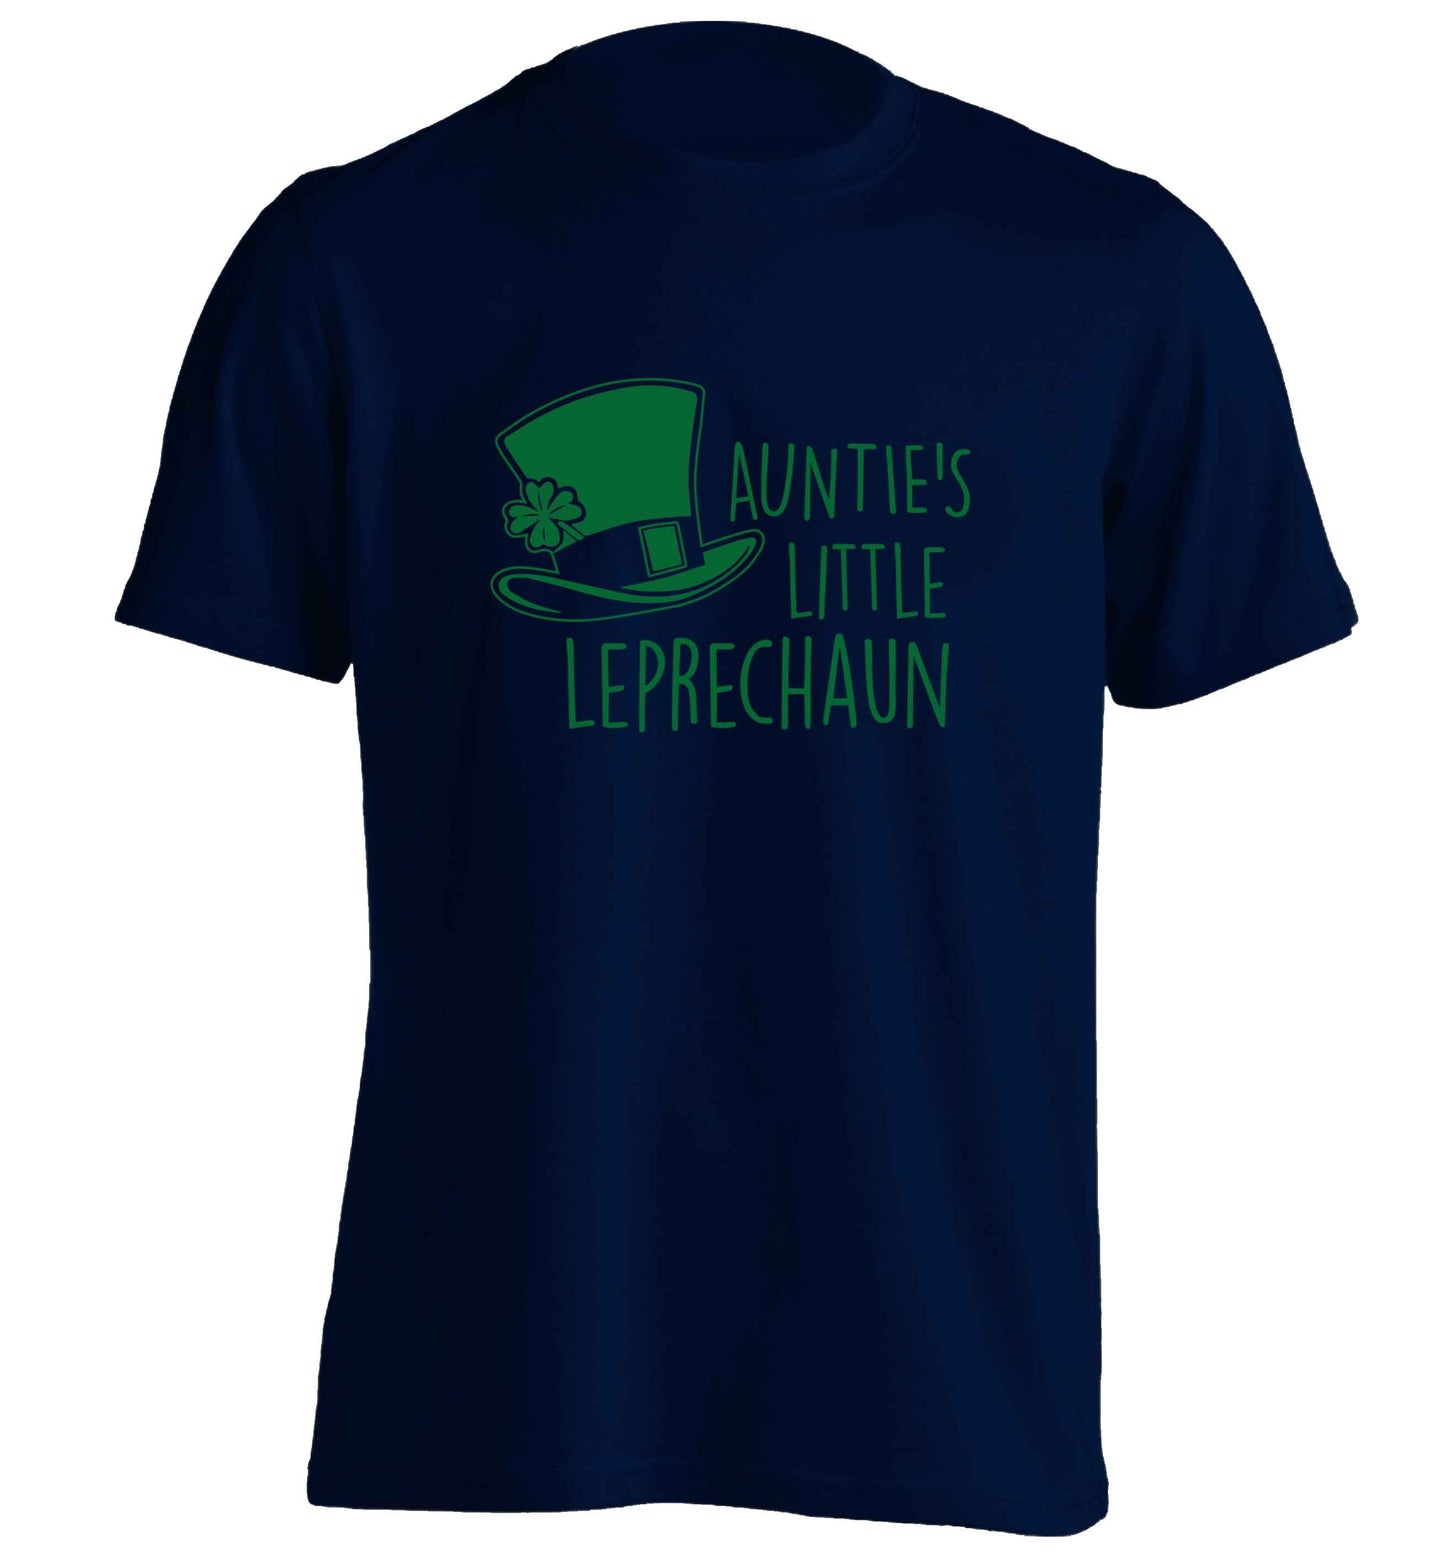 Auntie's little leprechaun adults unisex navy Tshirt 2XL